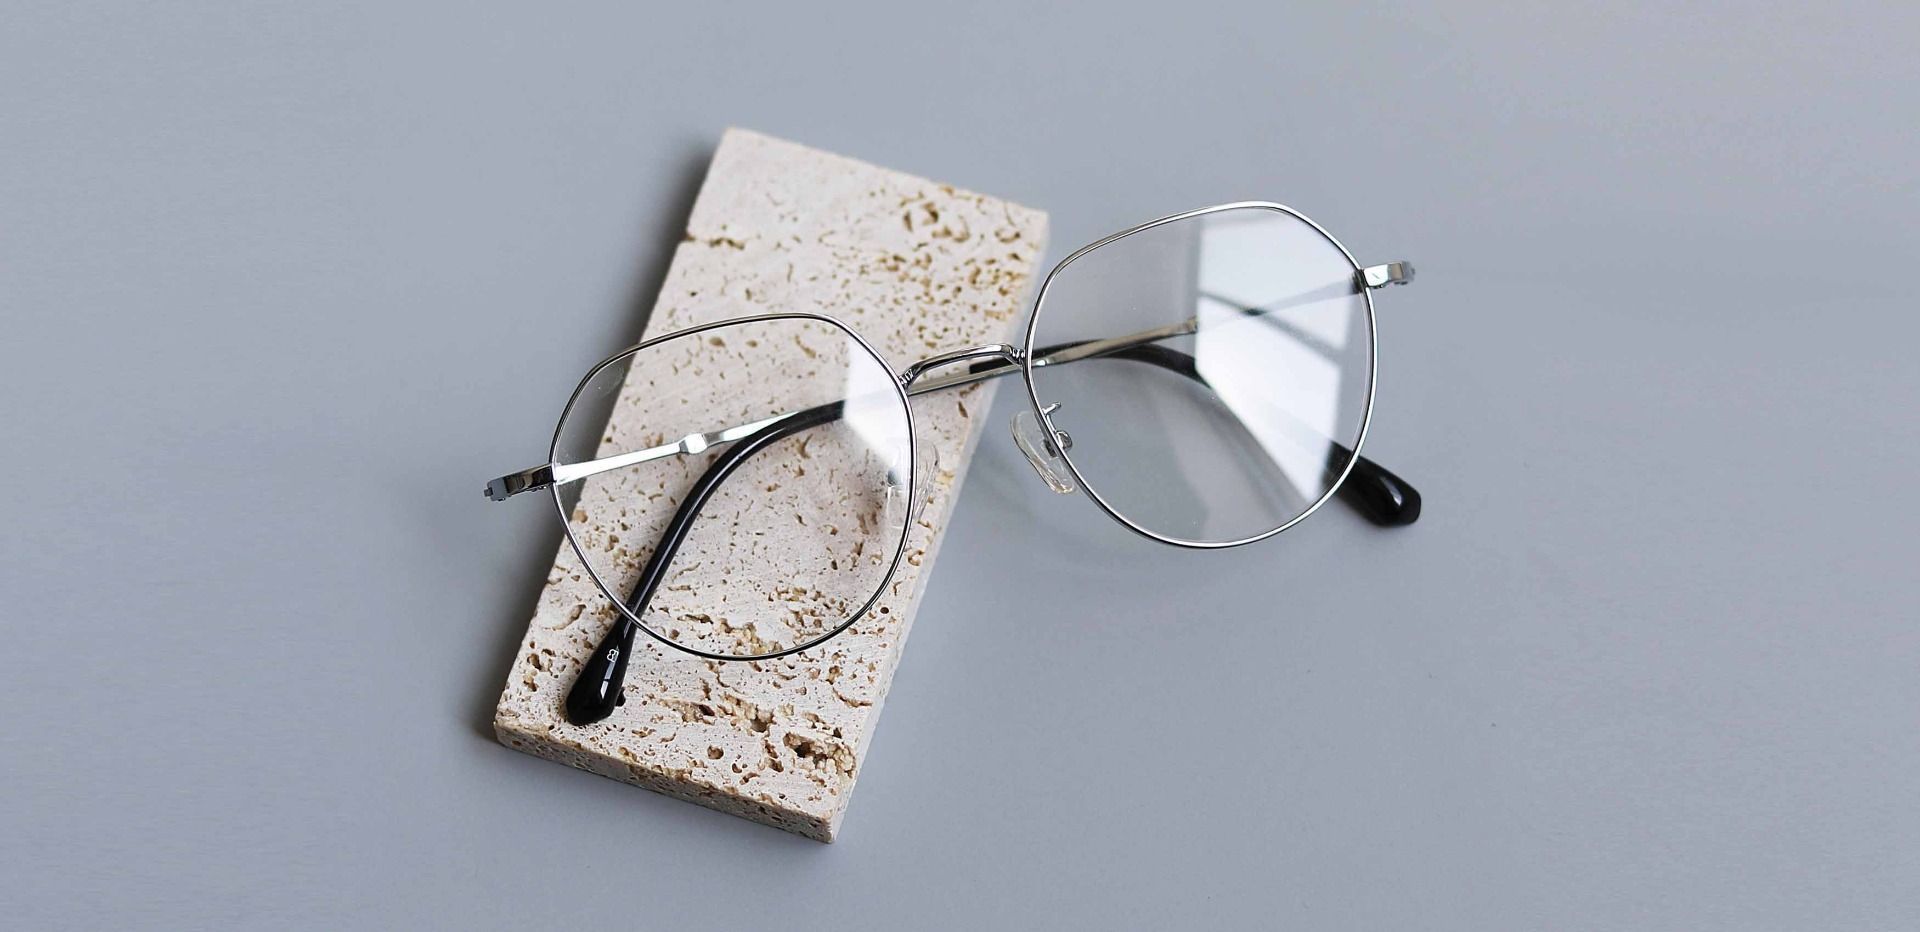 Langdon Geometric Prescription Glasses - Silver